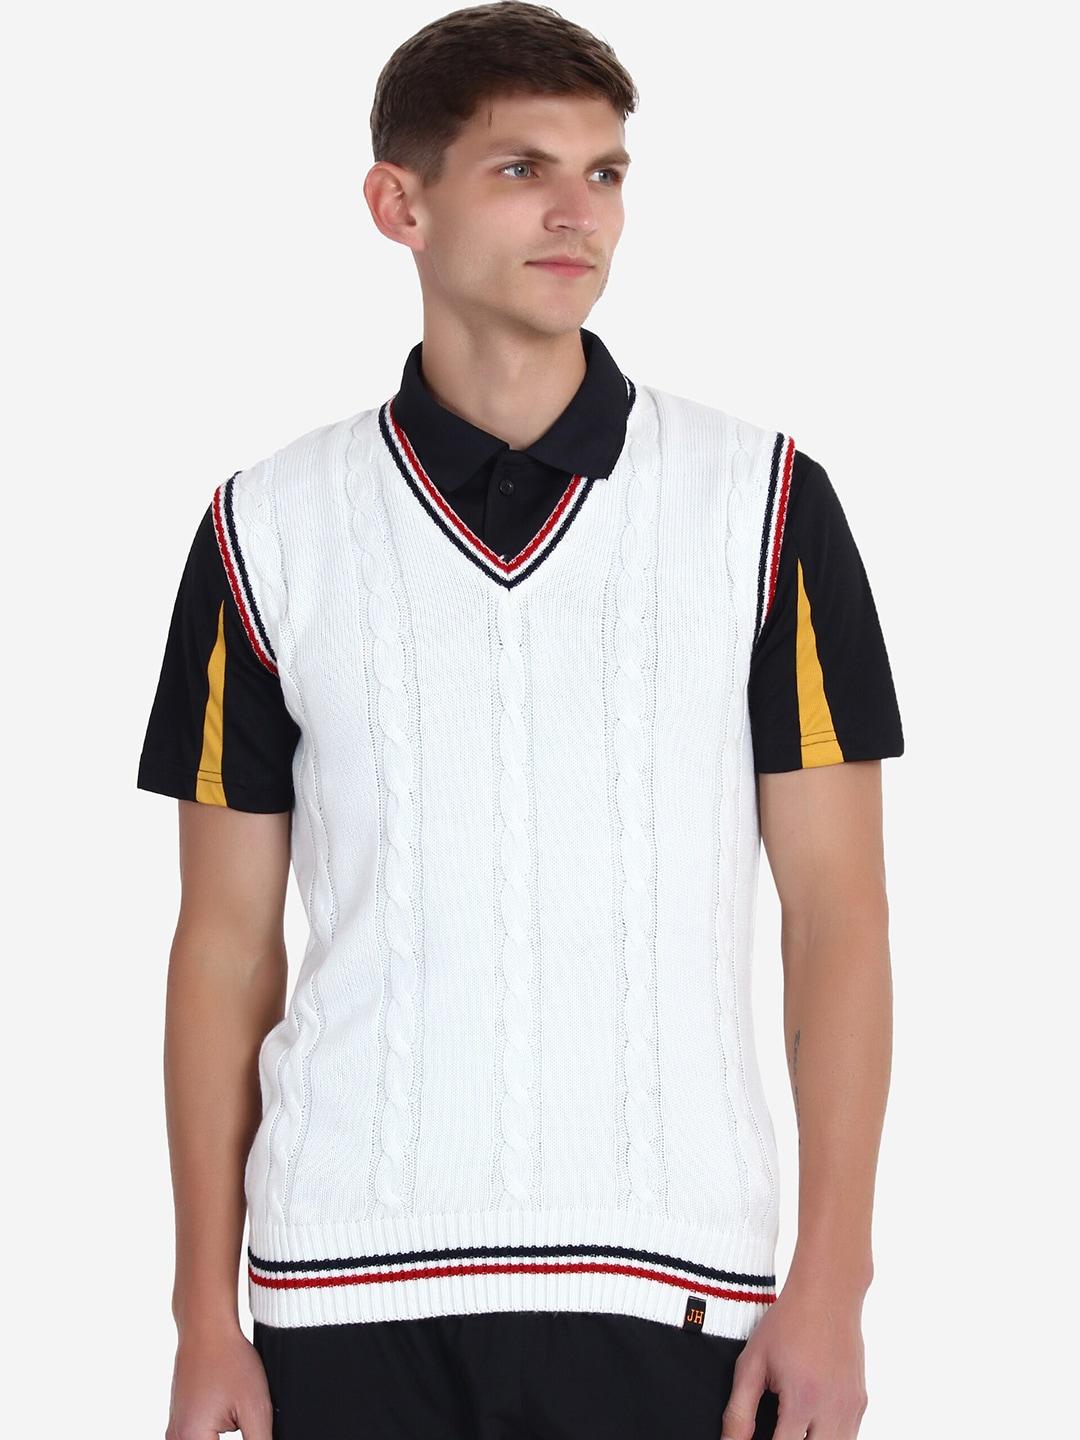 joe-hazel-men-white-self-design-acrylic-sweater-vest